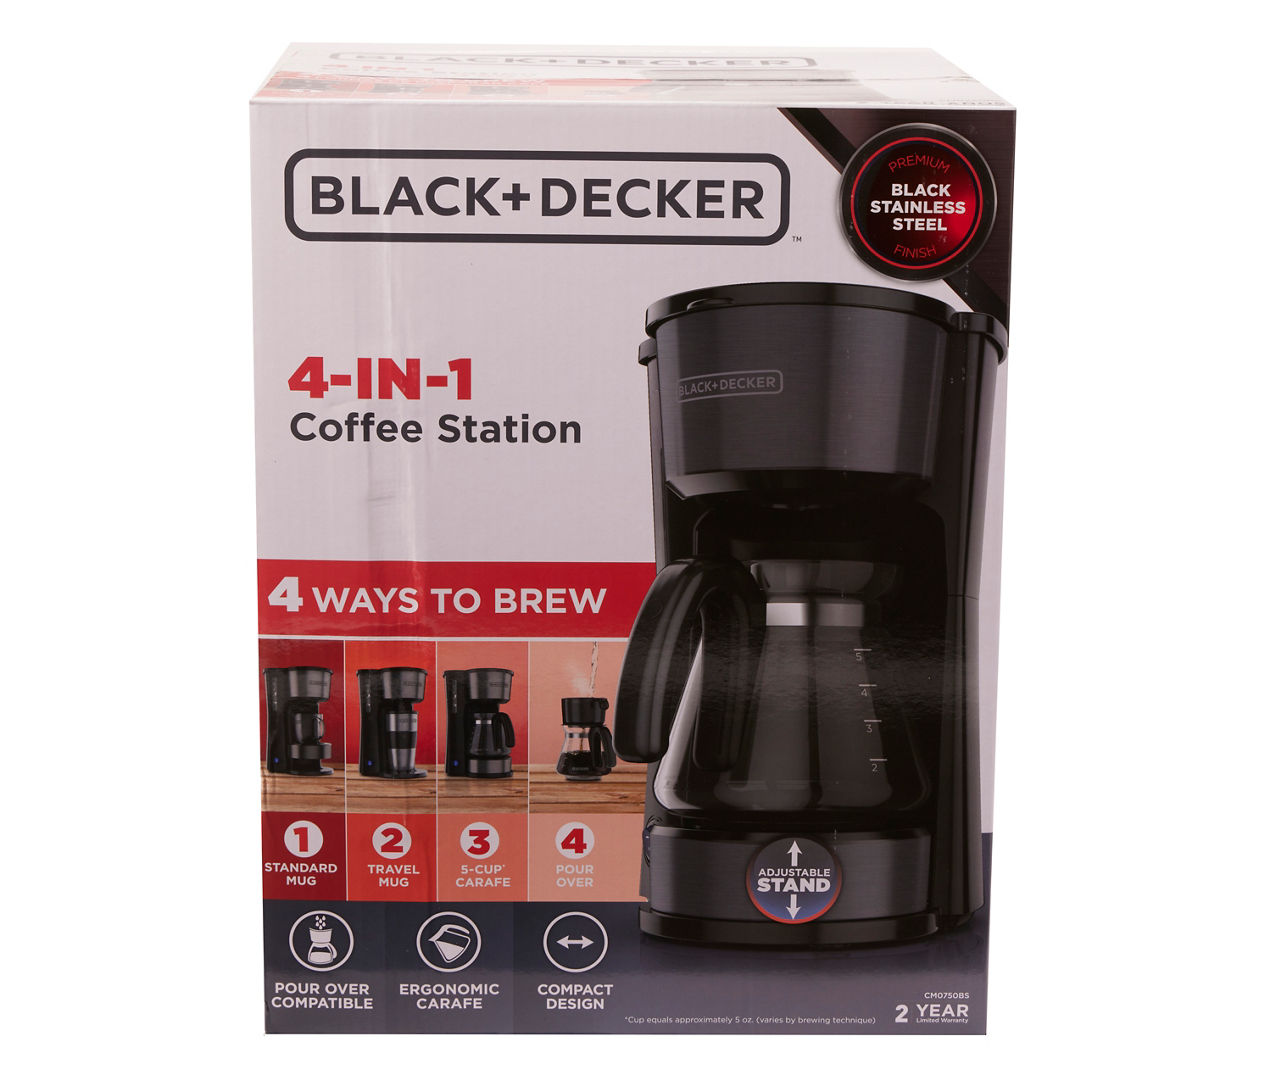 Black + Decker Black 4-in-1 Coffee Station